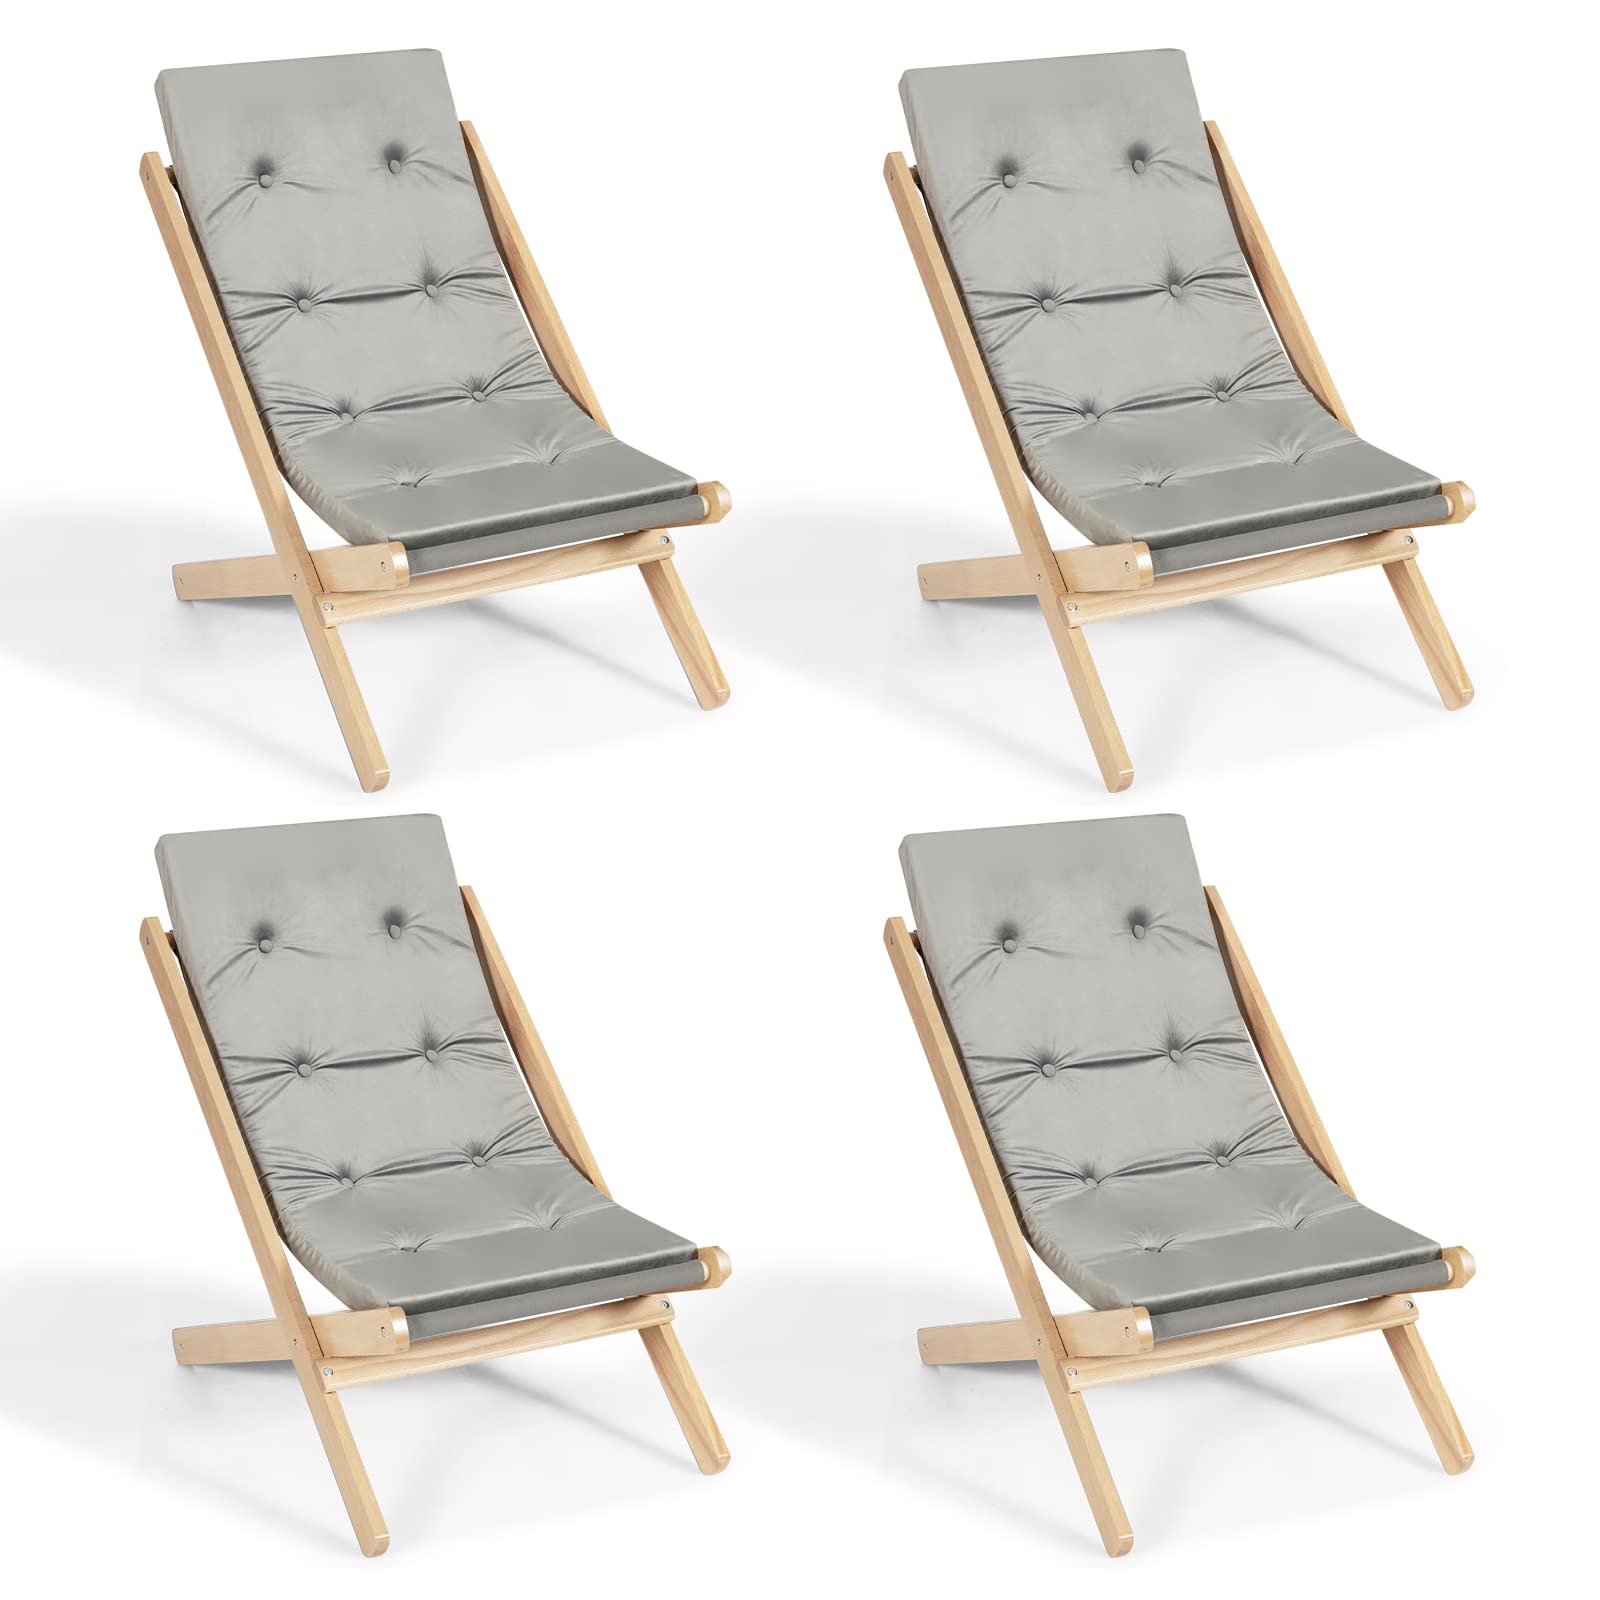 Giantex Beach Sling Chair, Outdoor Lounge Chair